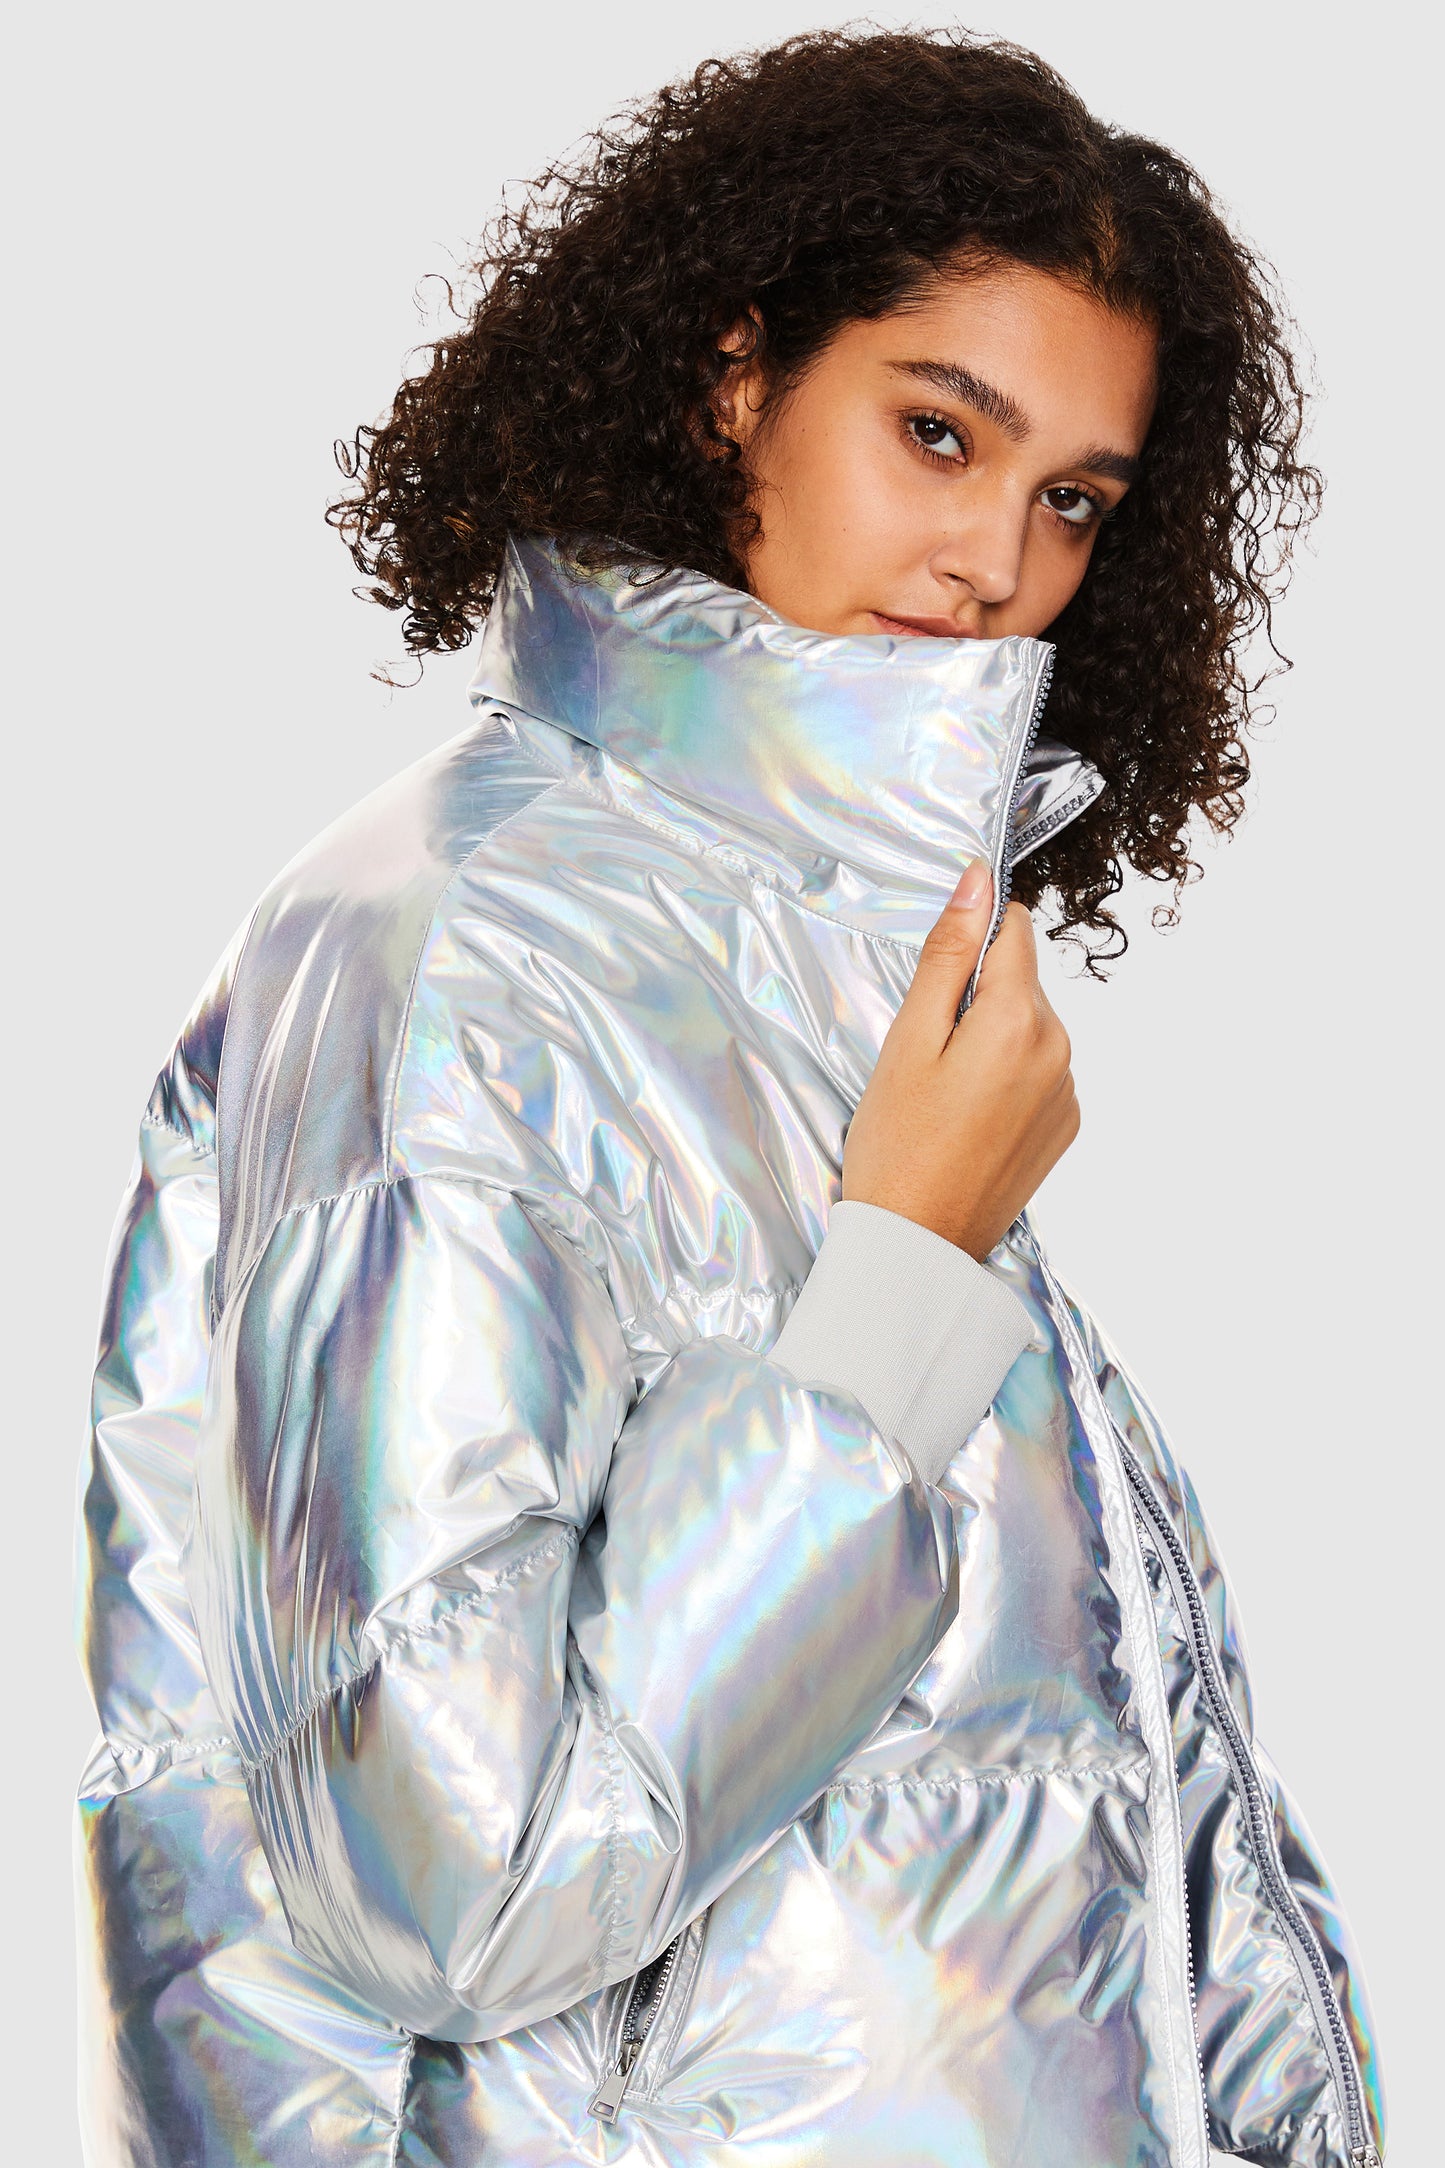 Metallic Shiny Cropped Winter Puffer Jacket